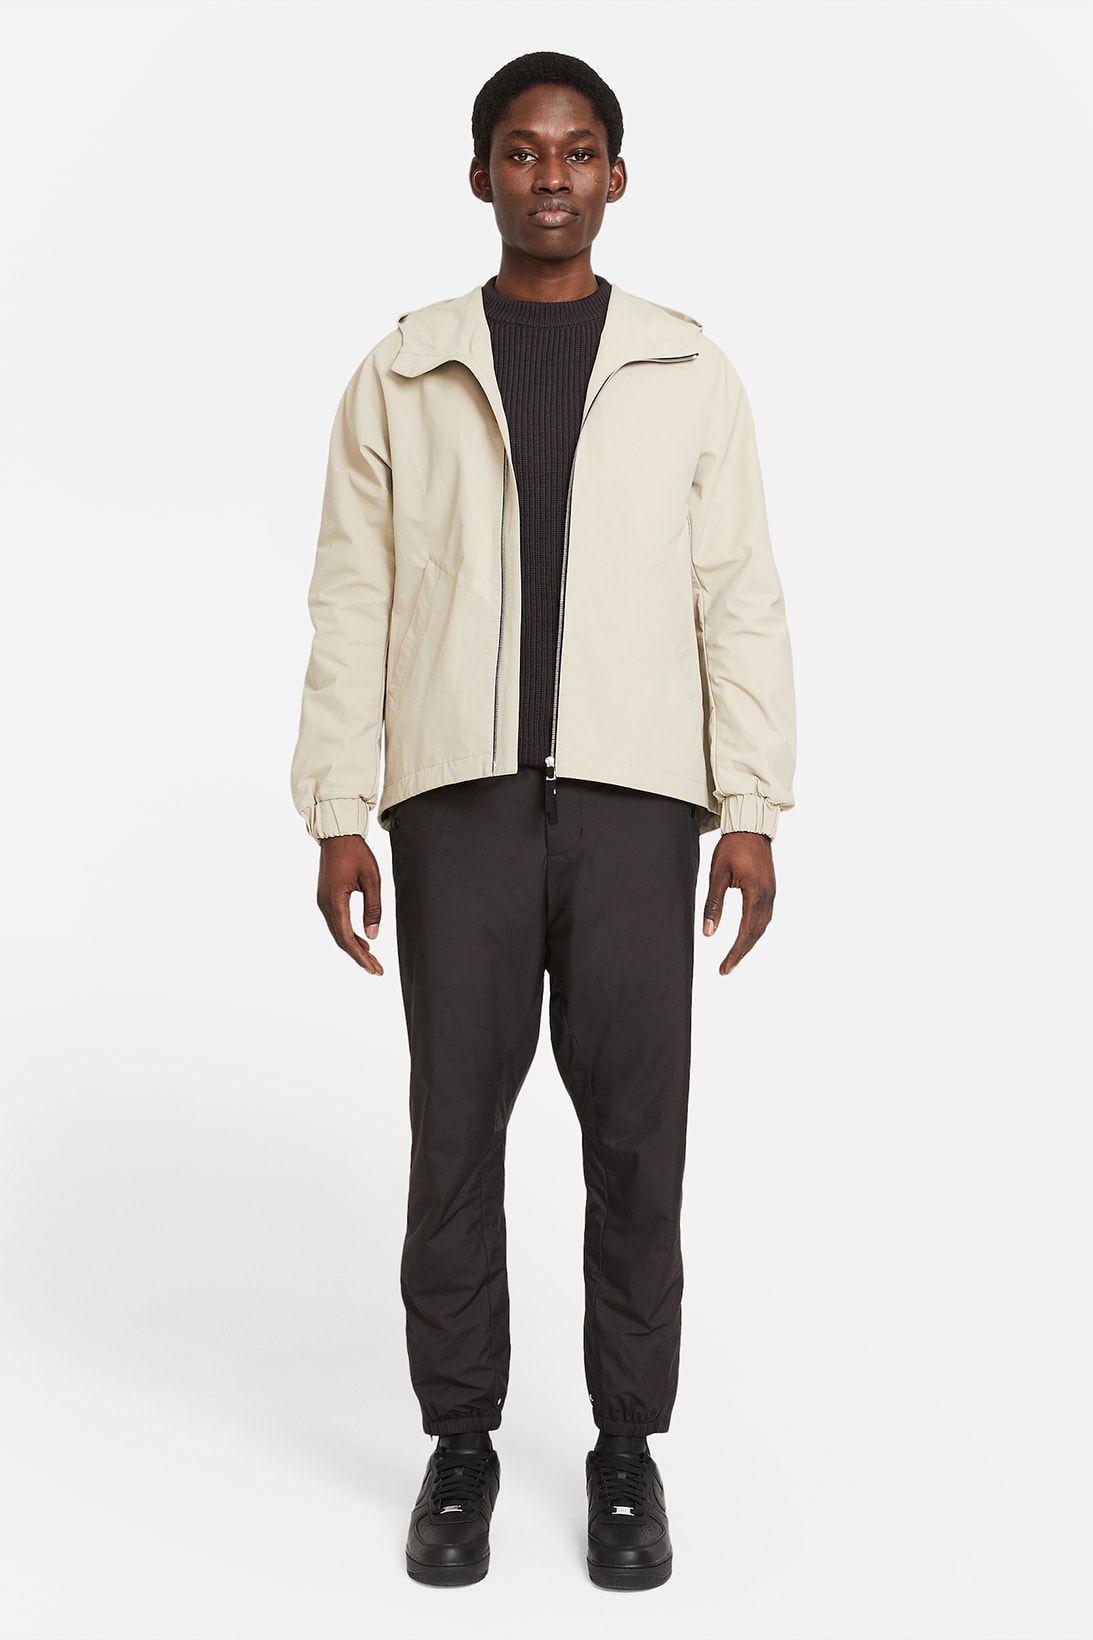 nike design exploration apparel collection jacket pants